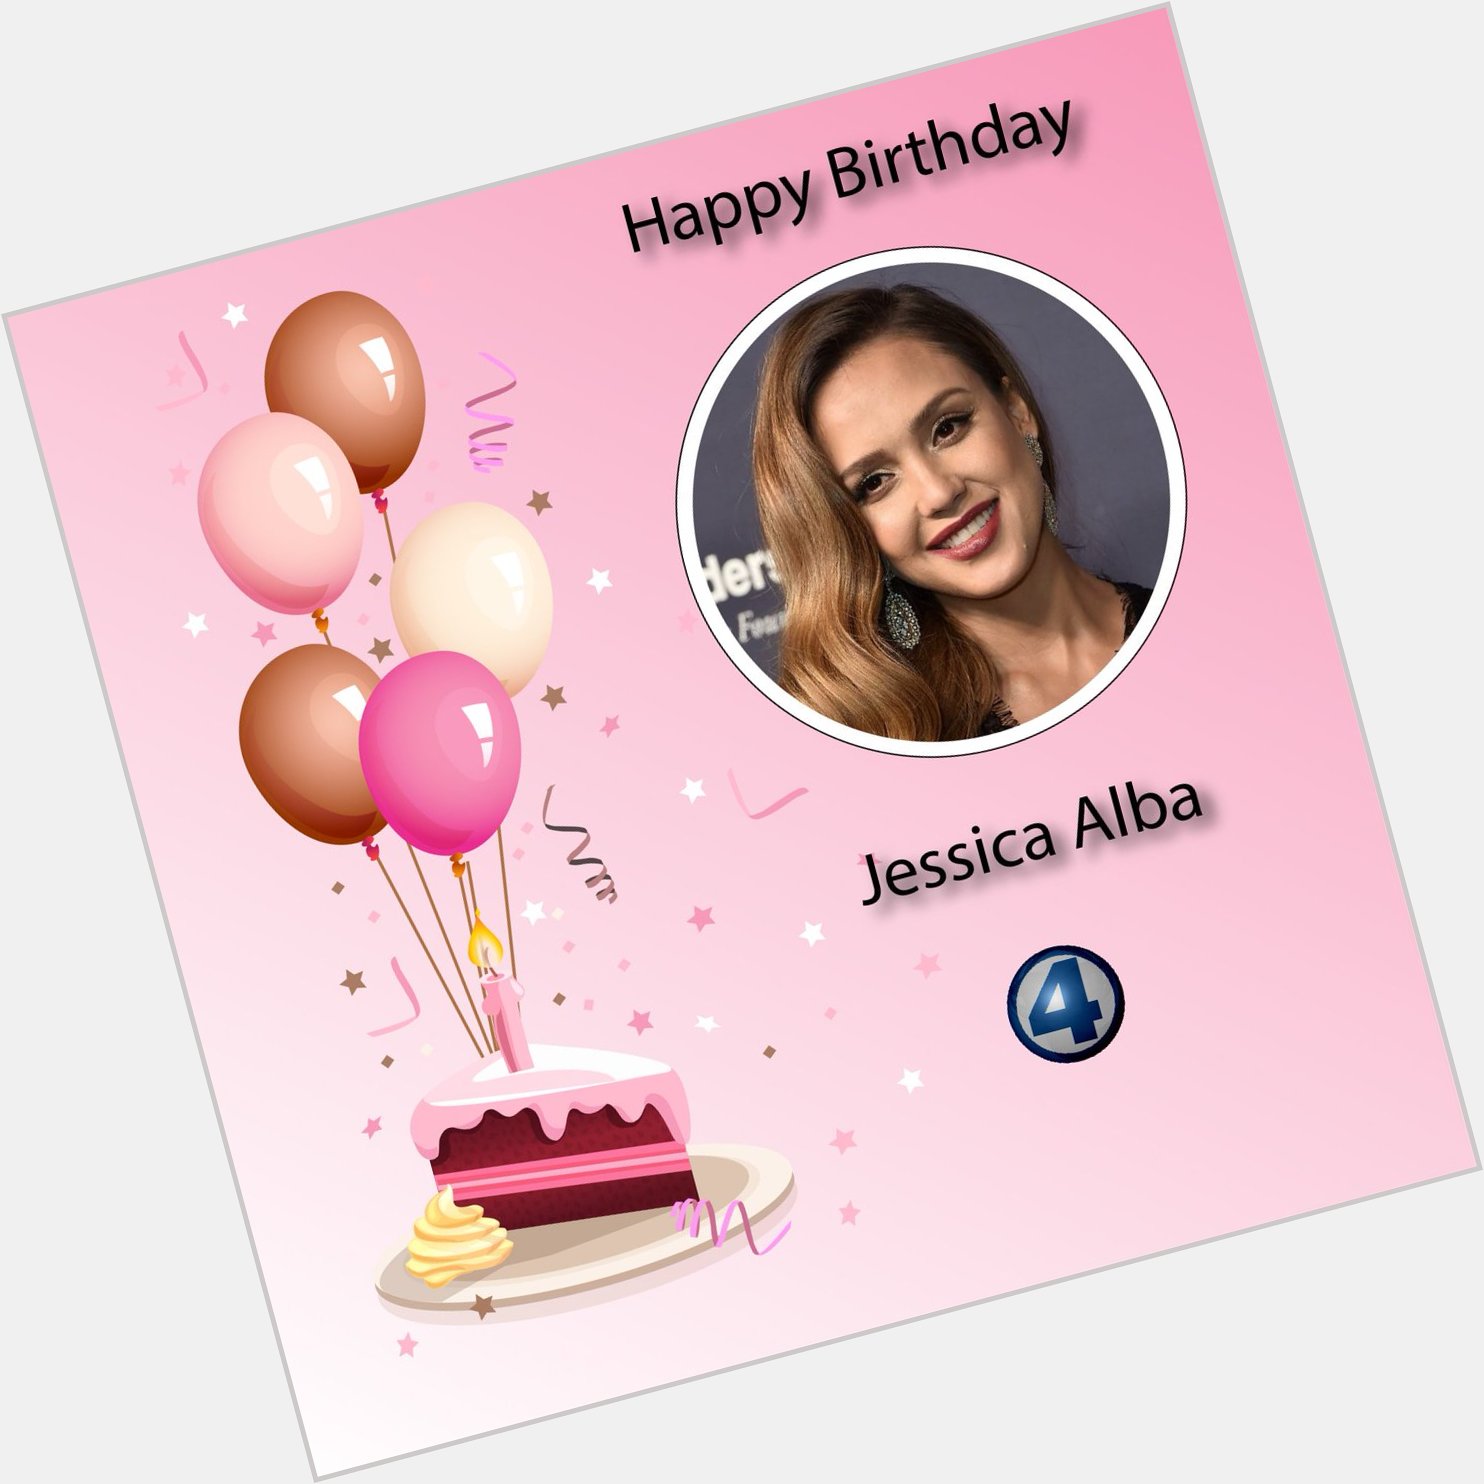 Happy birthday to Jessica Alba   